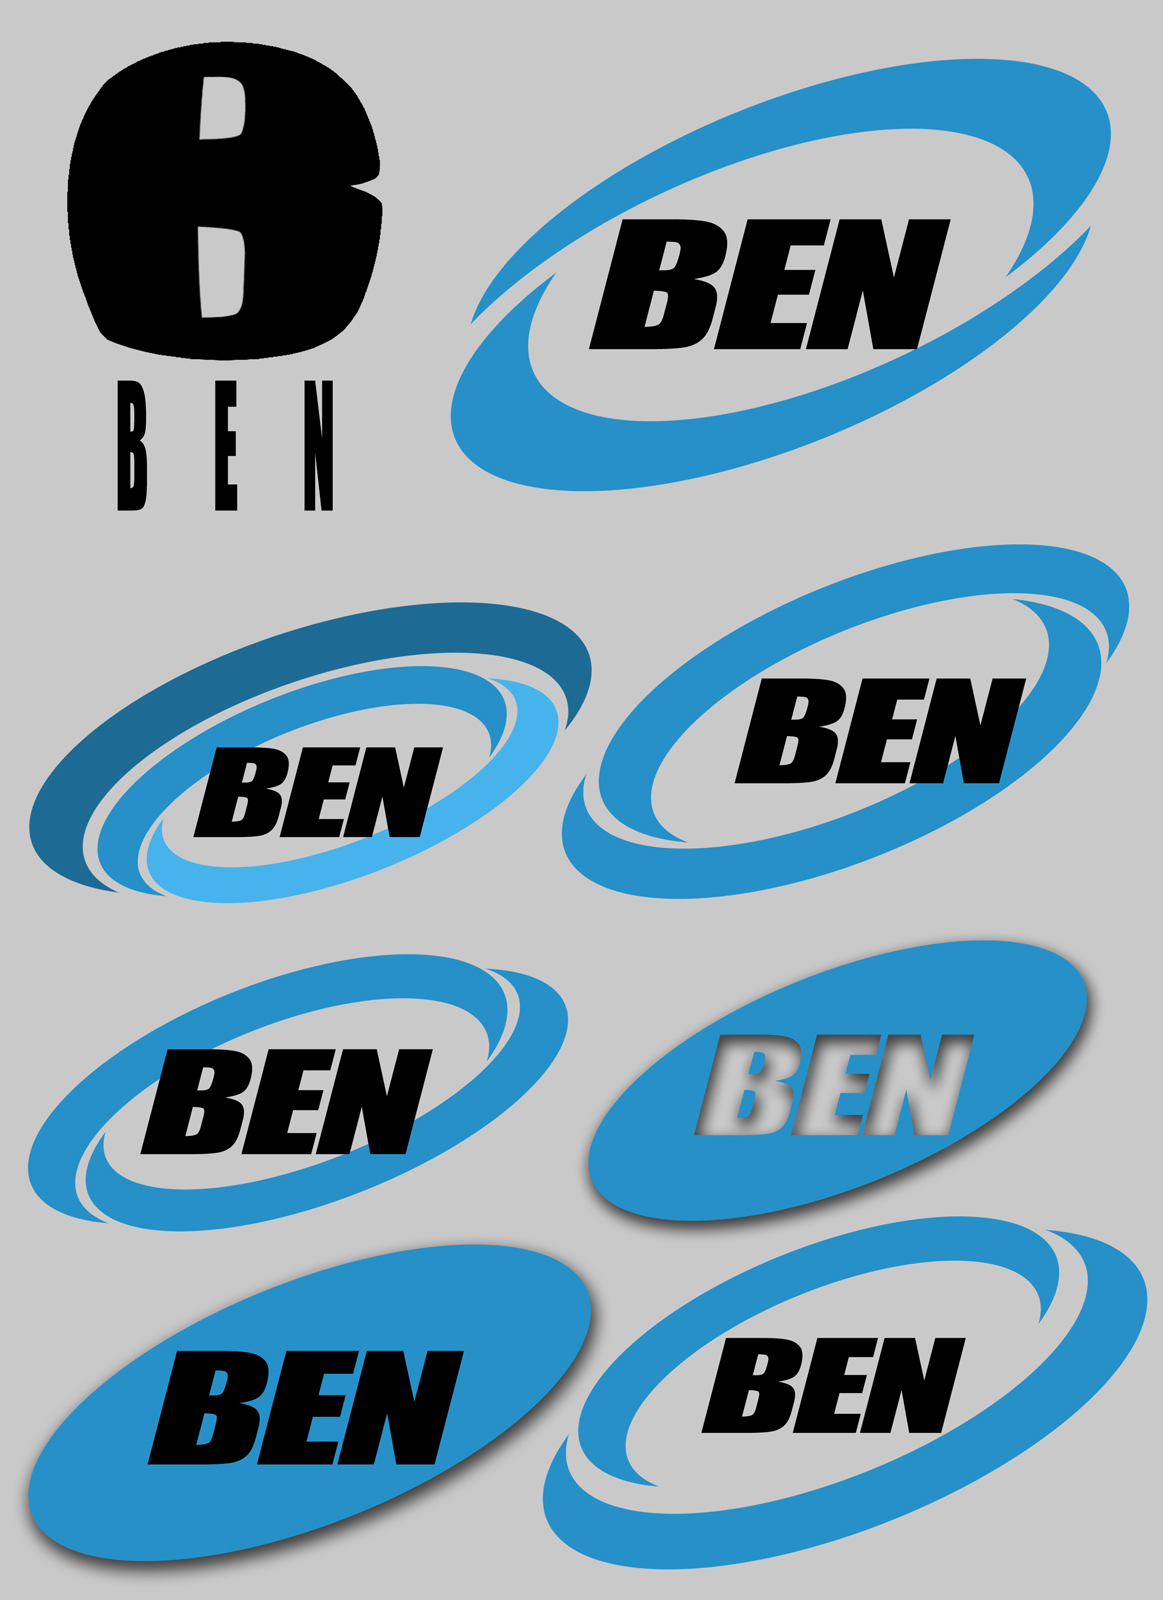 Toby-Gray-Ben-logos-3